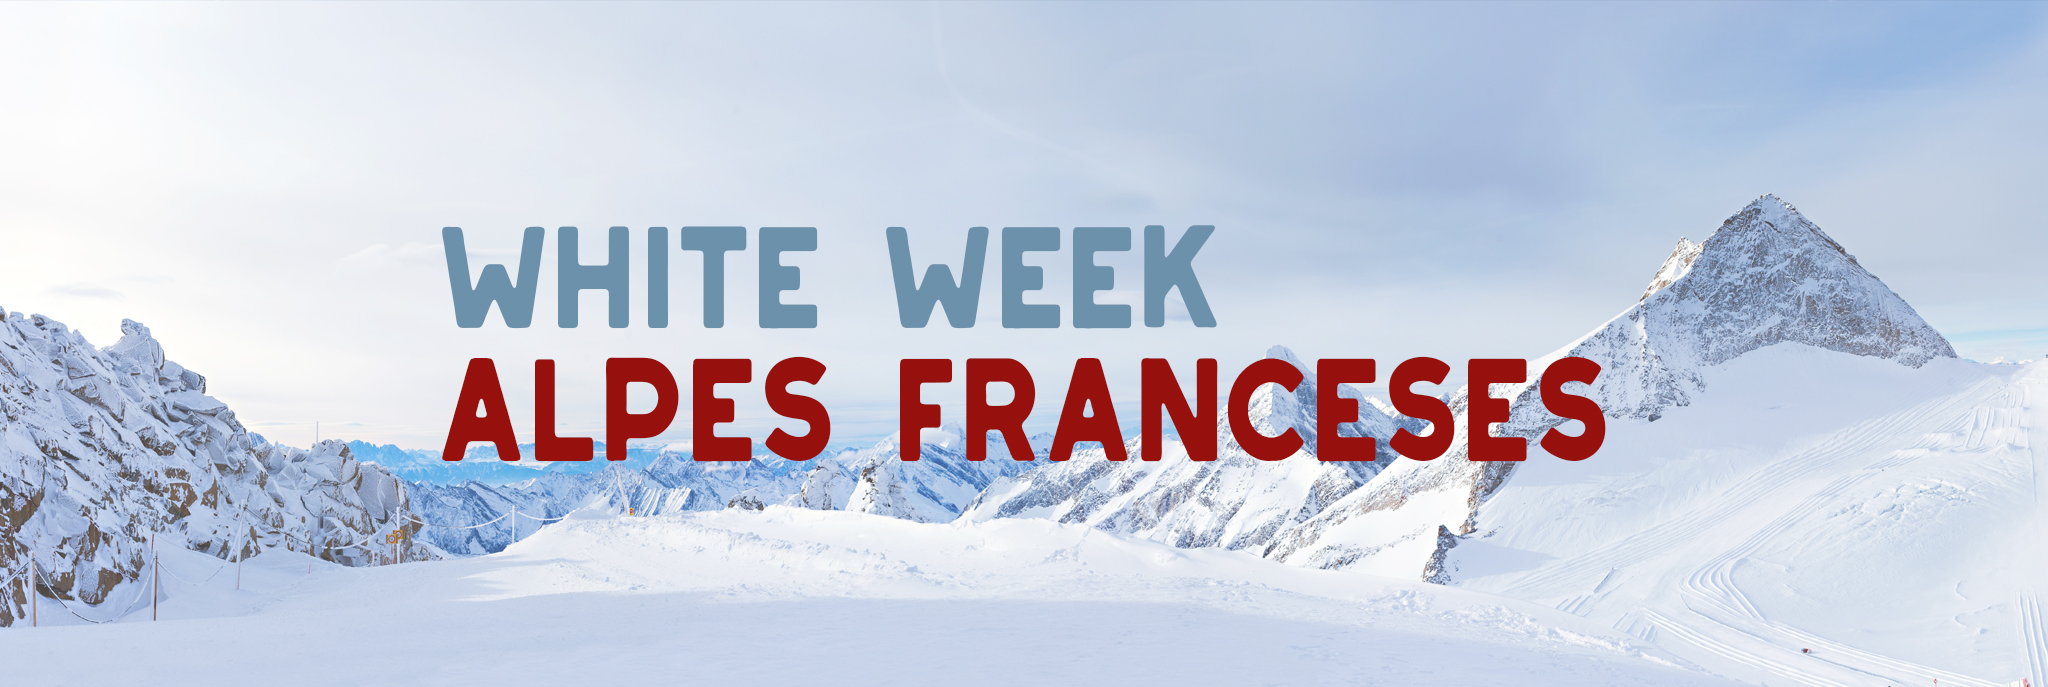 white-week-alpes-franceses